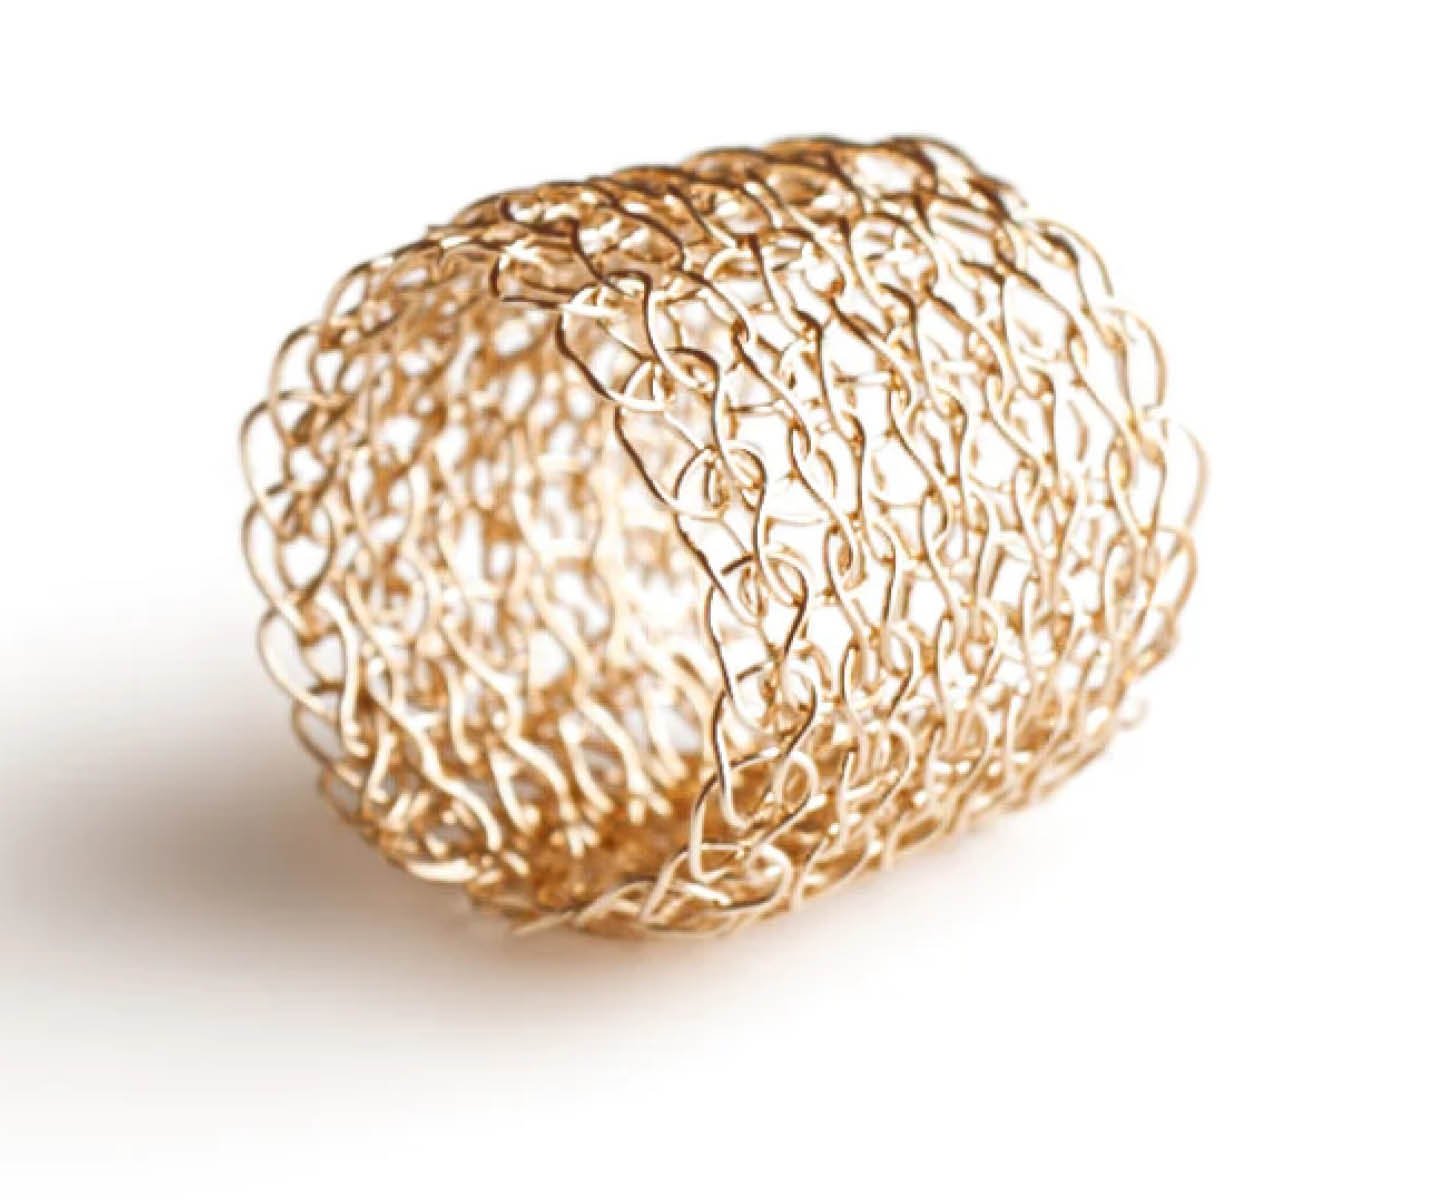 Yoola Design's wire crochet